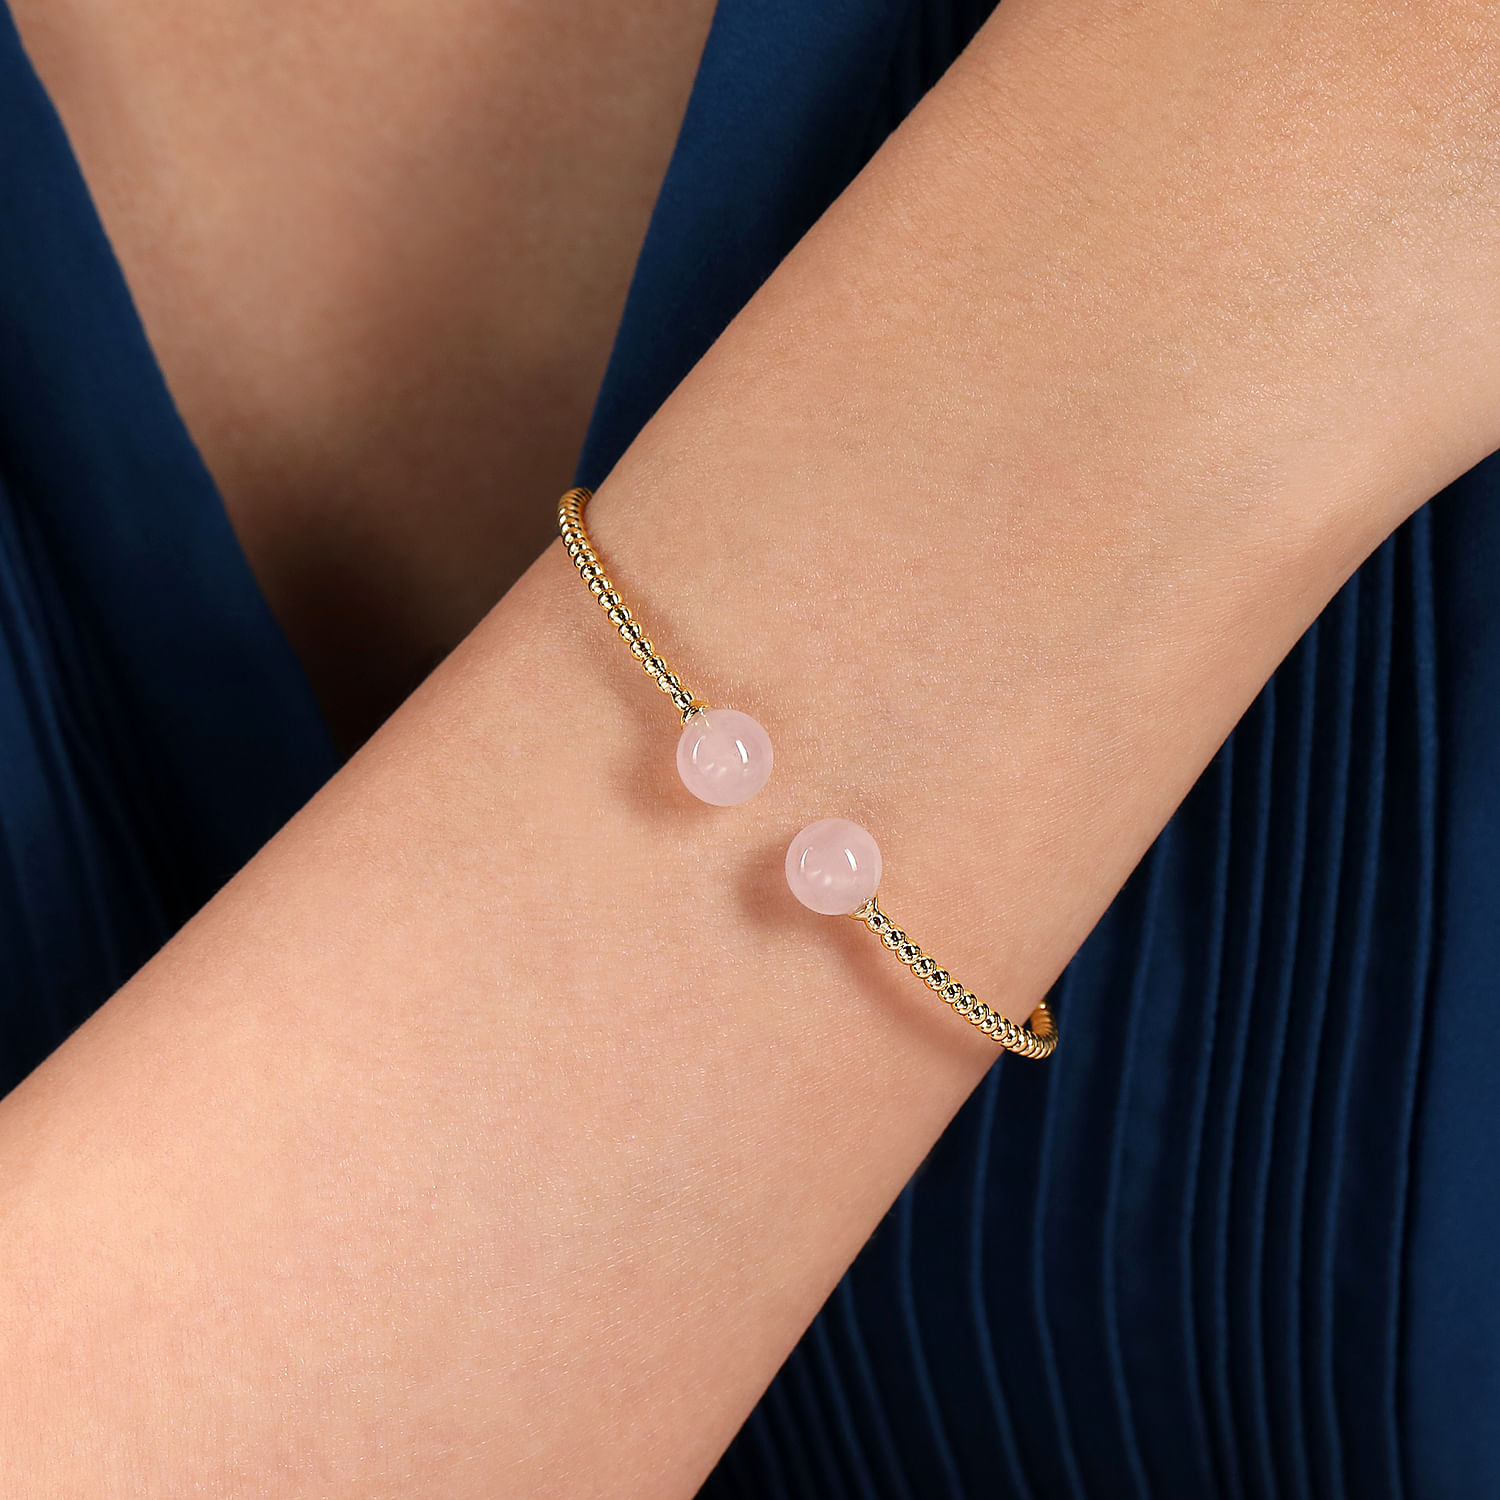 14K Yellow Gold Bujukan Bead Split Cuff Bracelet with Pink Quartz Beads